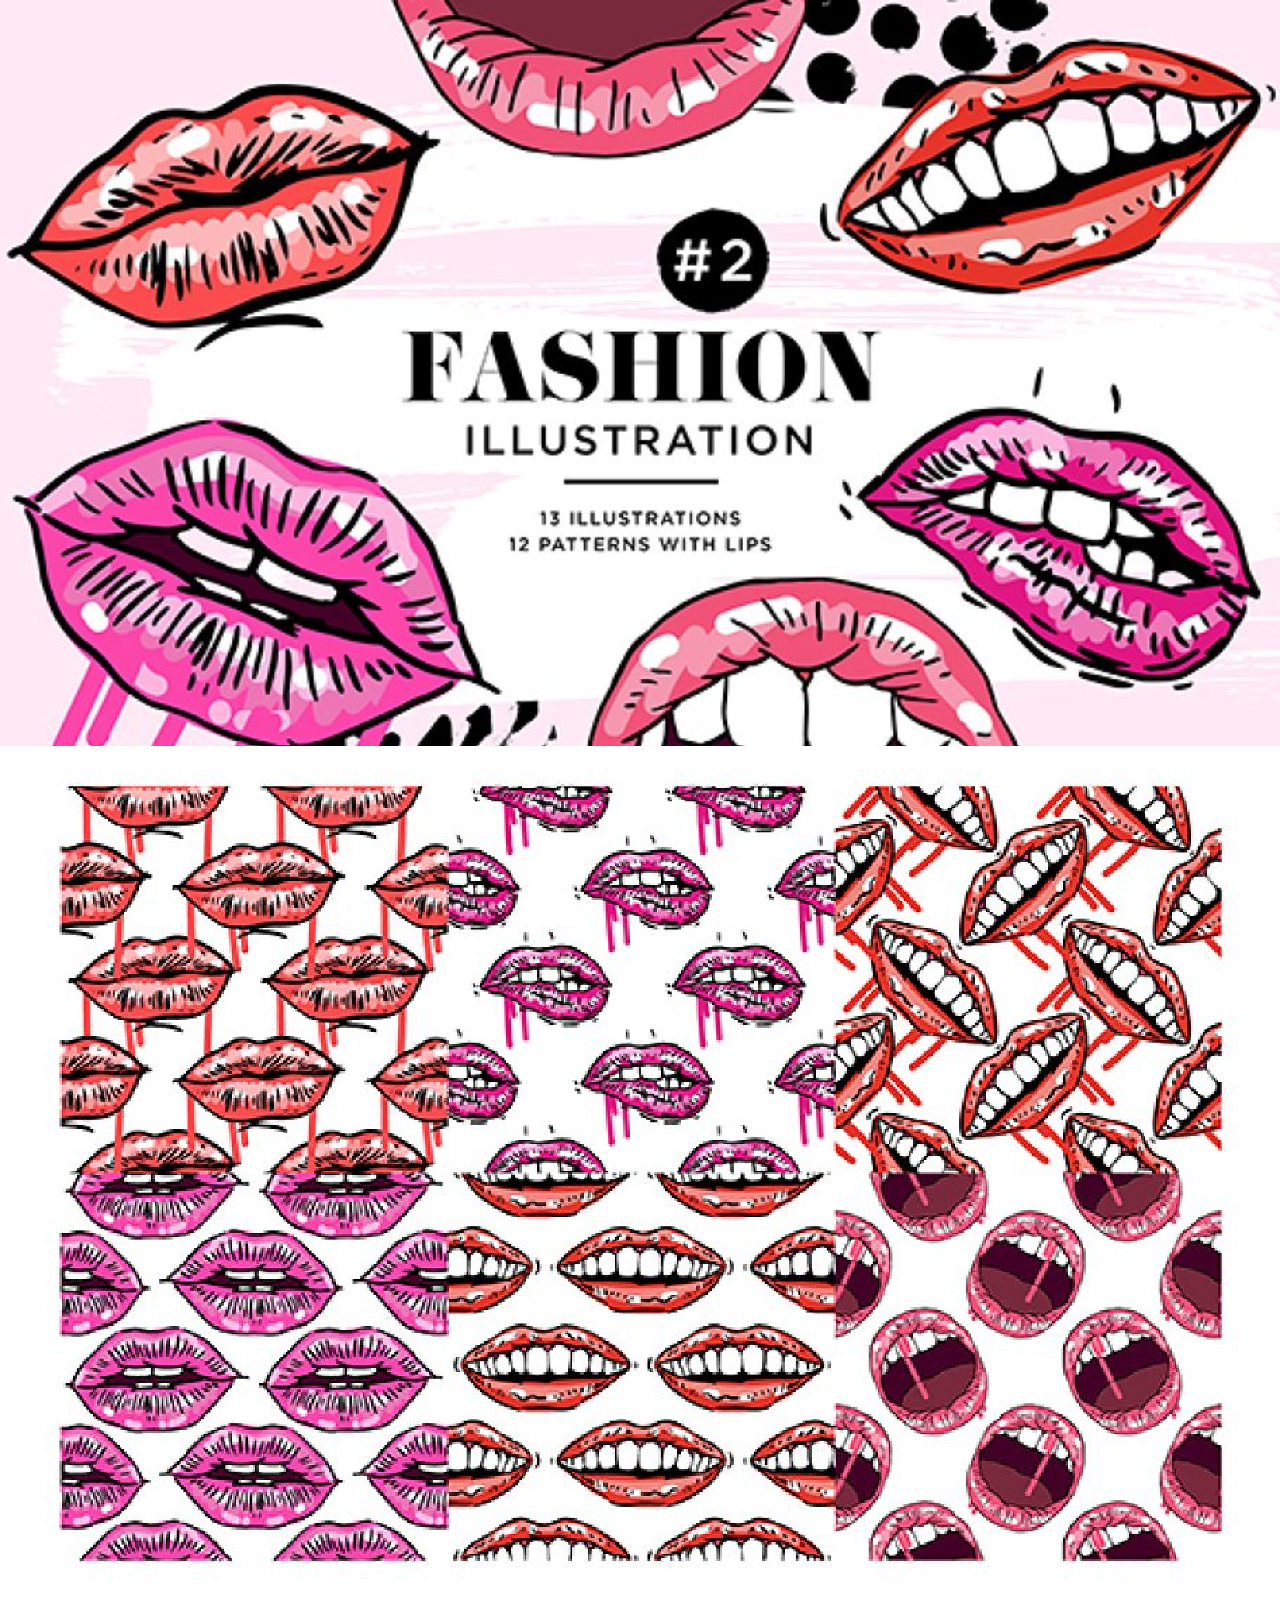 Fashion lips pinterest image preview.